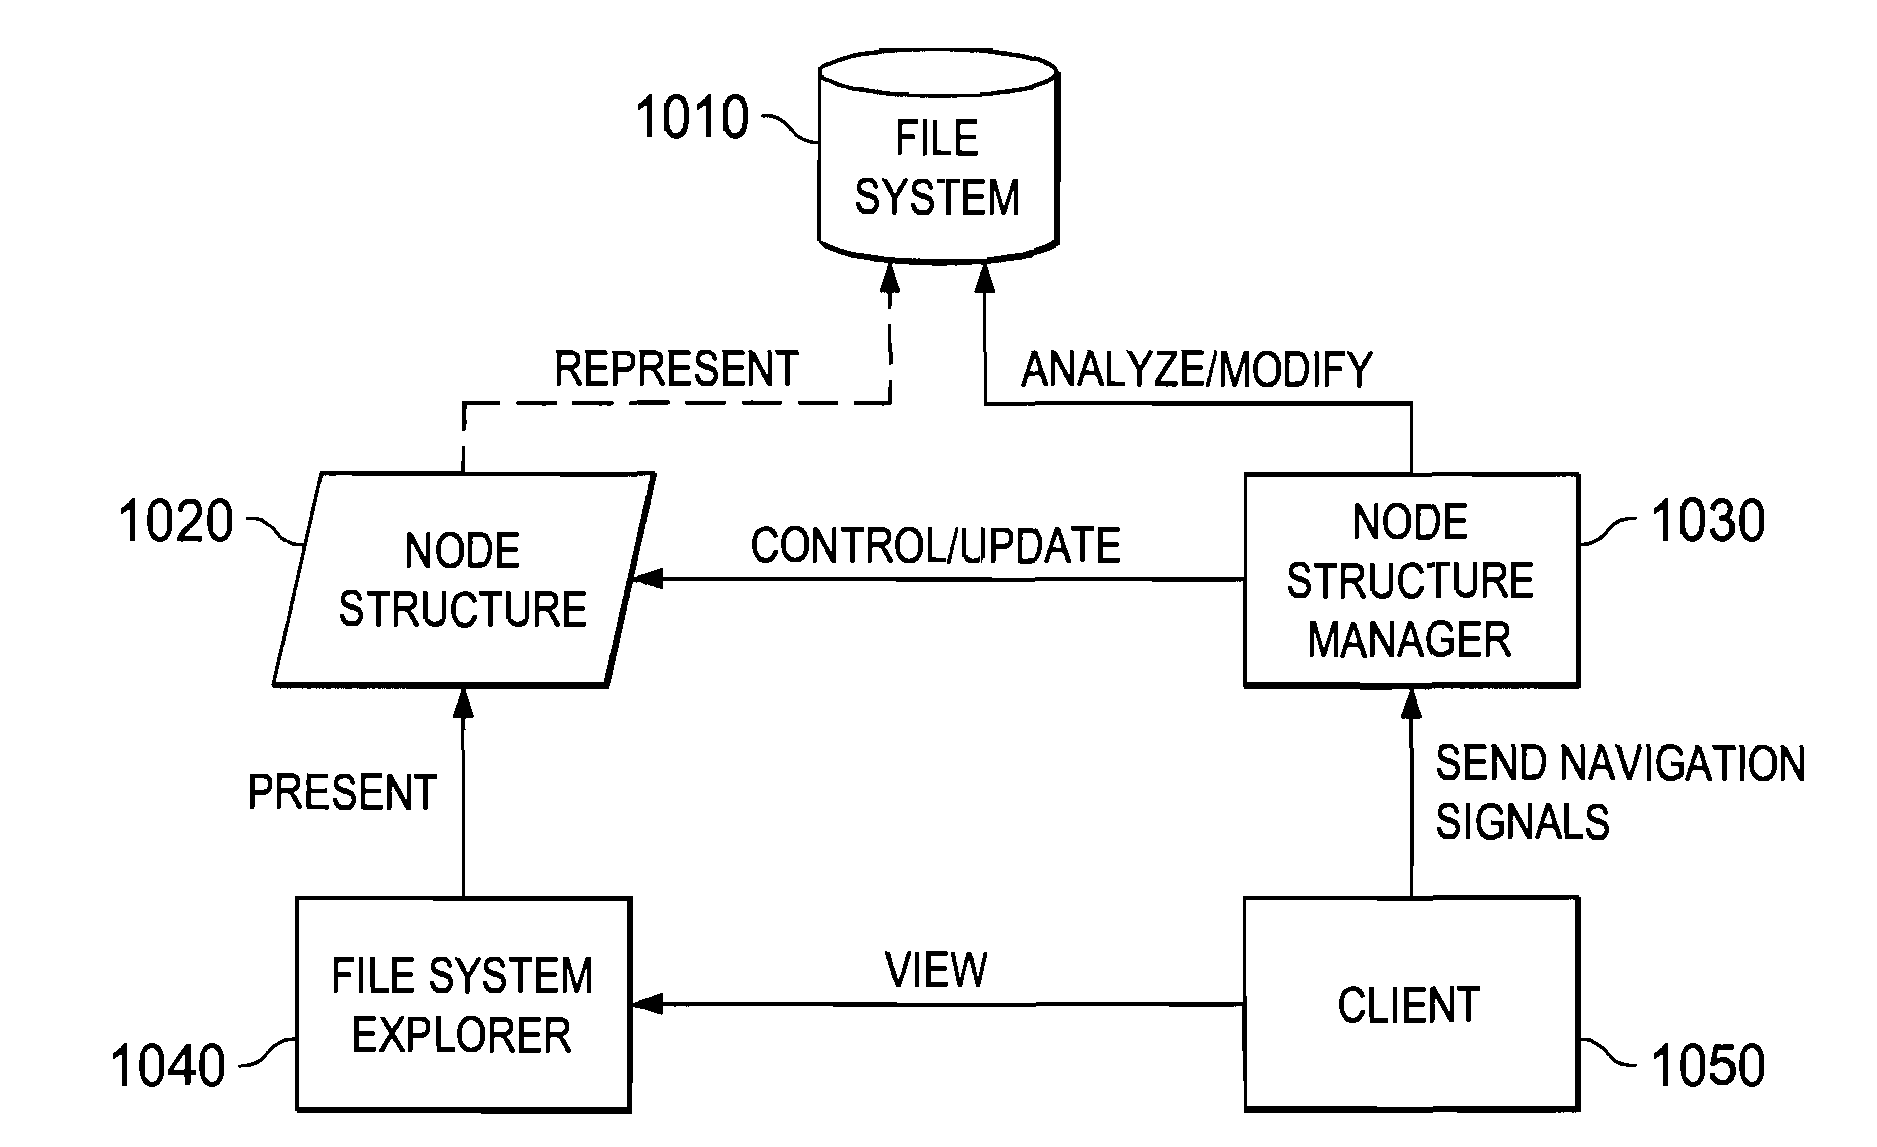 File system representation for accelerated navigation